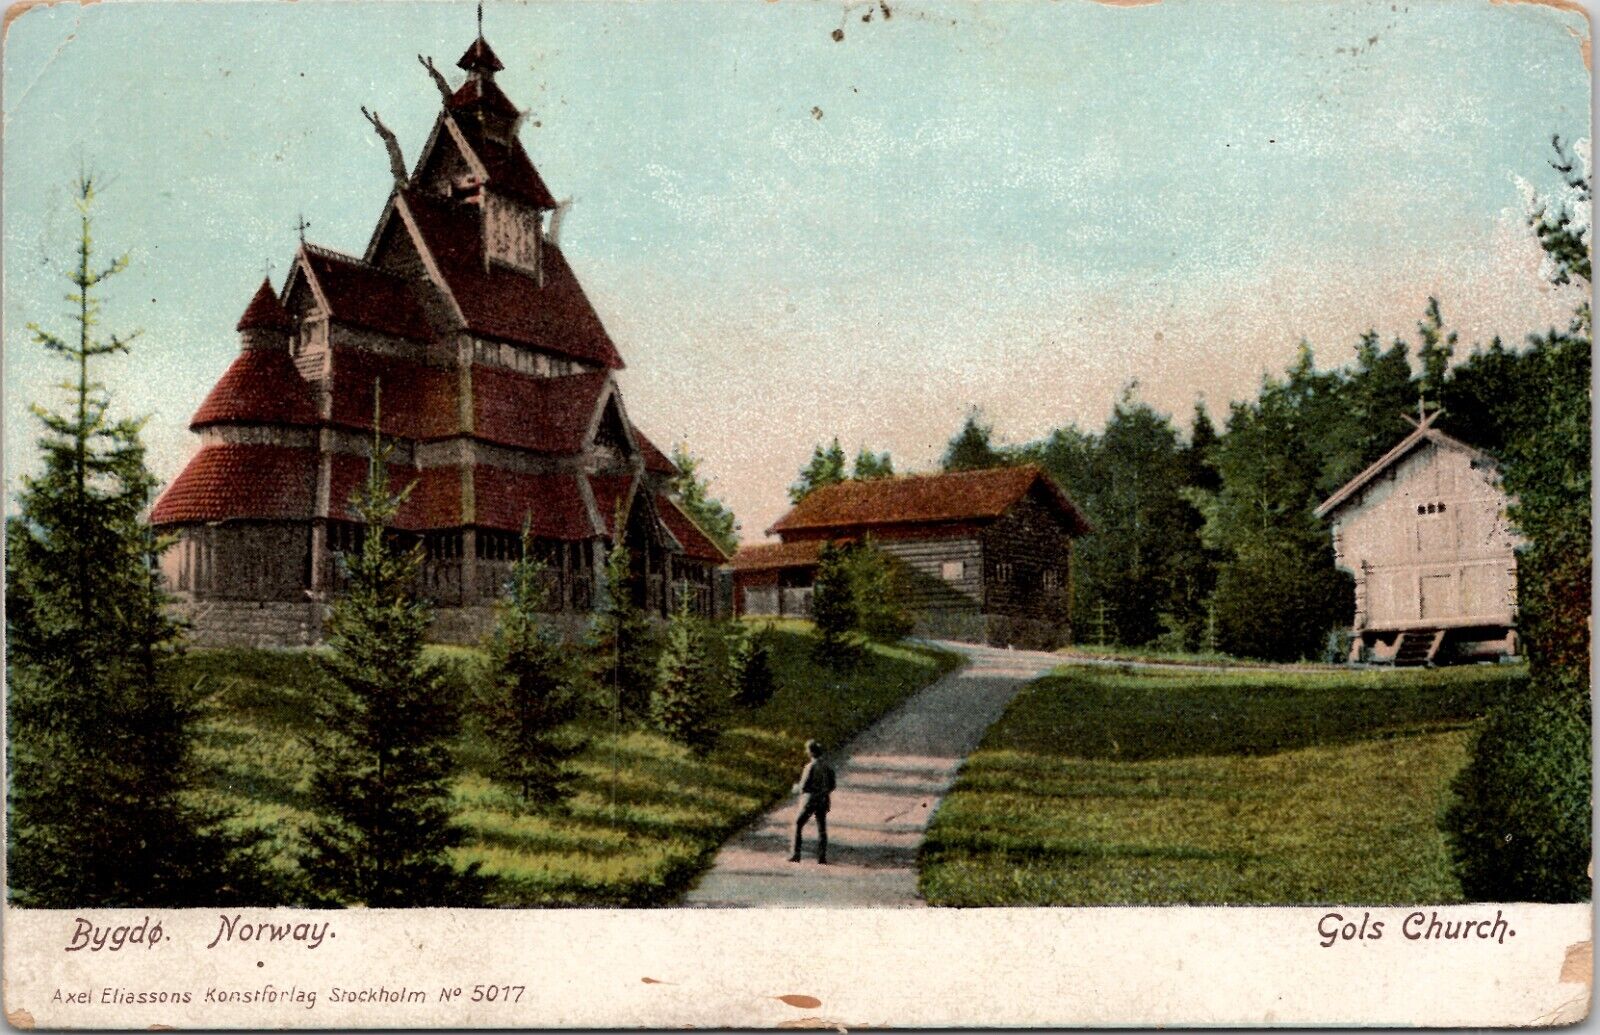 Bygdo Norway, Gols Church Vintage Postcard Wps1